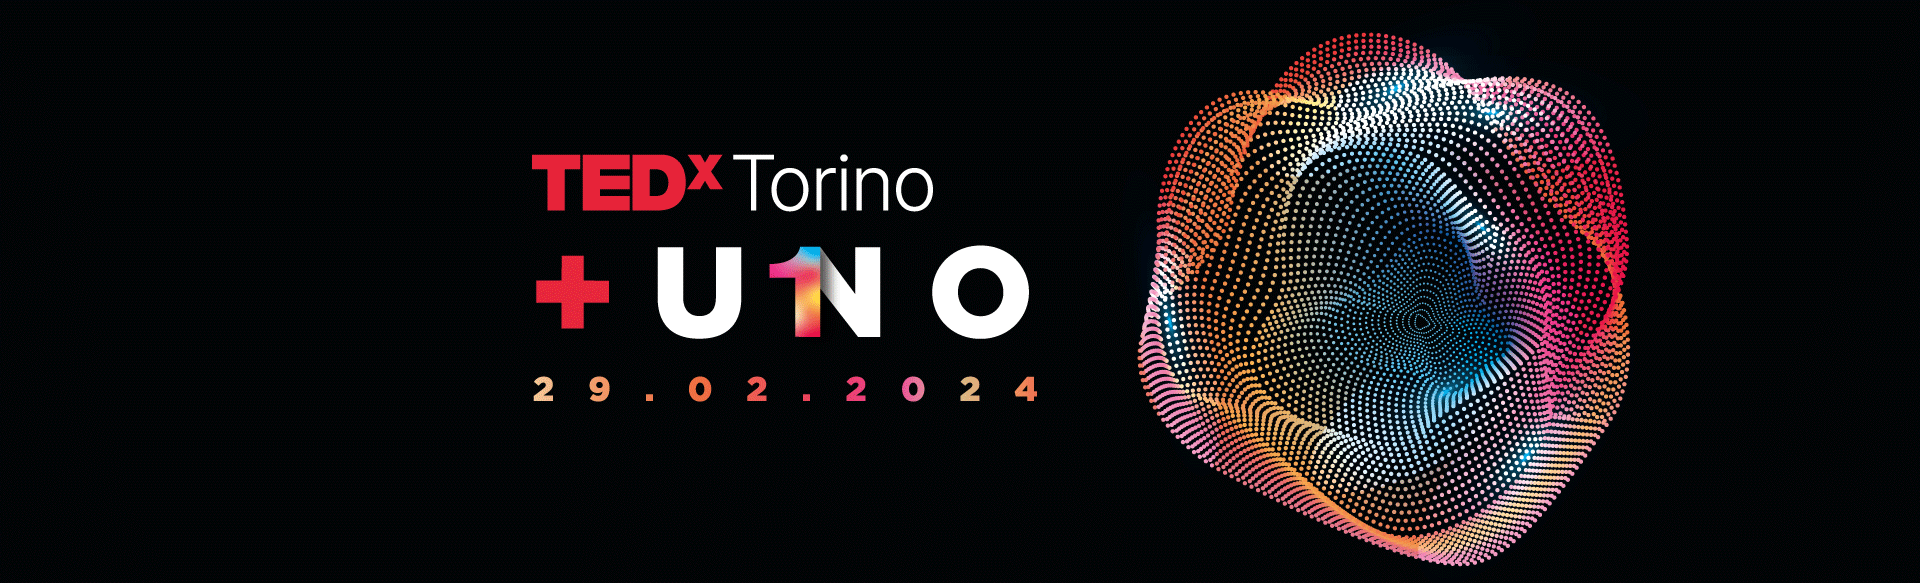 TEDxTorino + UNO